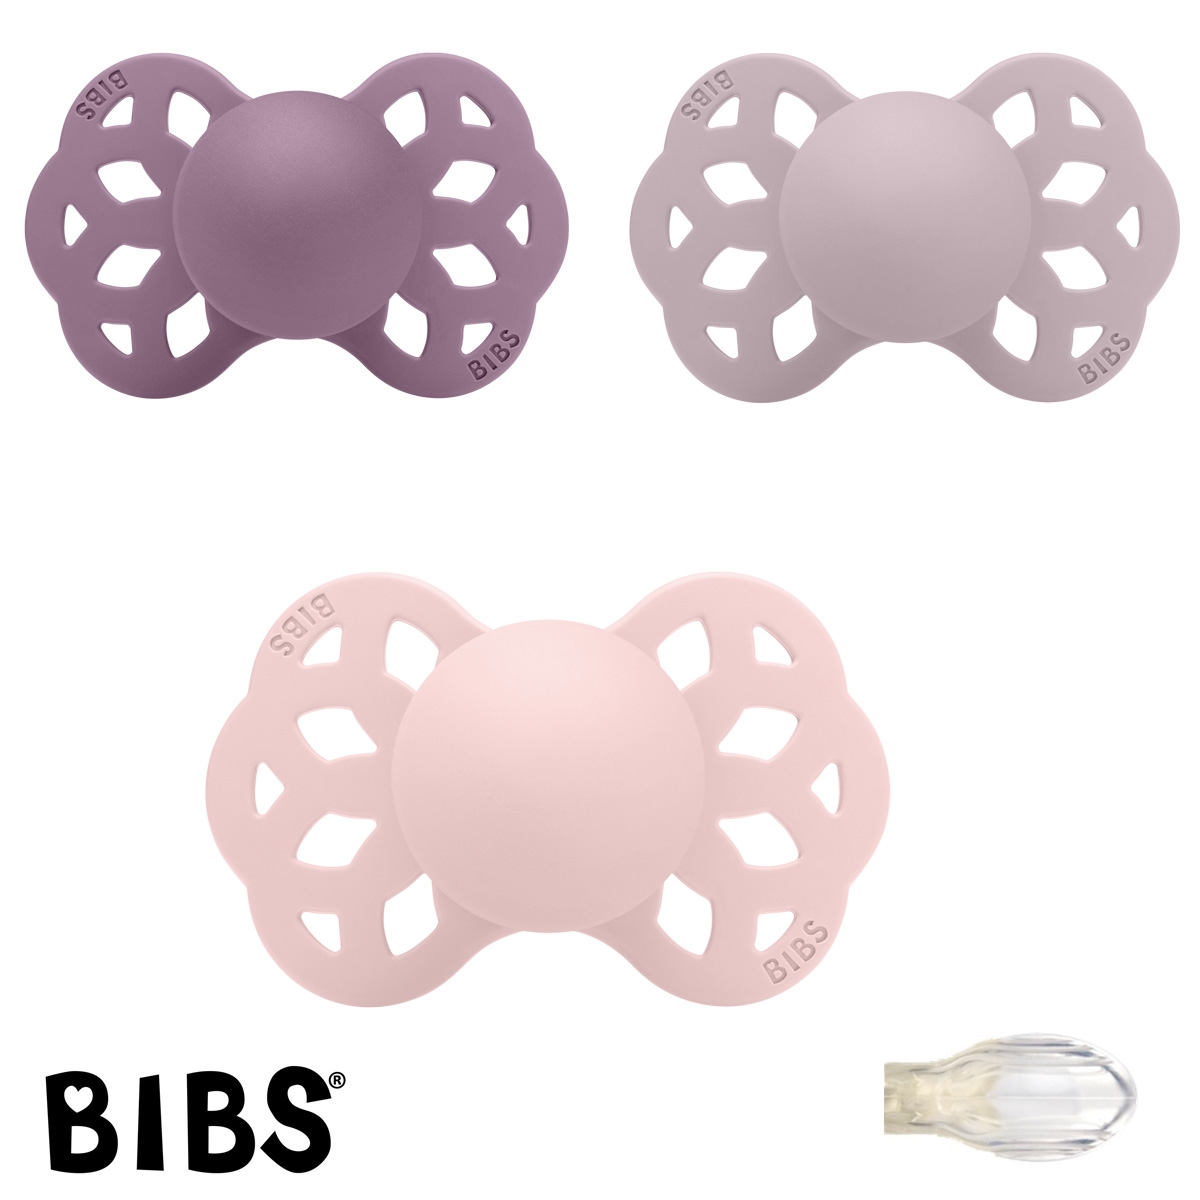 Bibs Infinity Schnuller mit Namen, Symmetrisch Silikon Gr. 2, 1 Blossom, 1 Mauve, 1 Dusky Lilac, 3\'er Pack